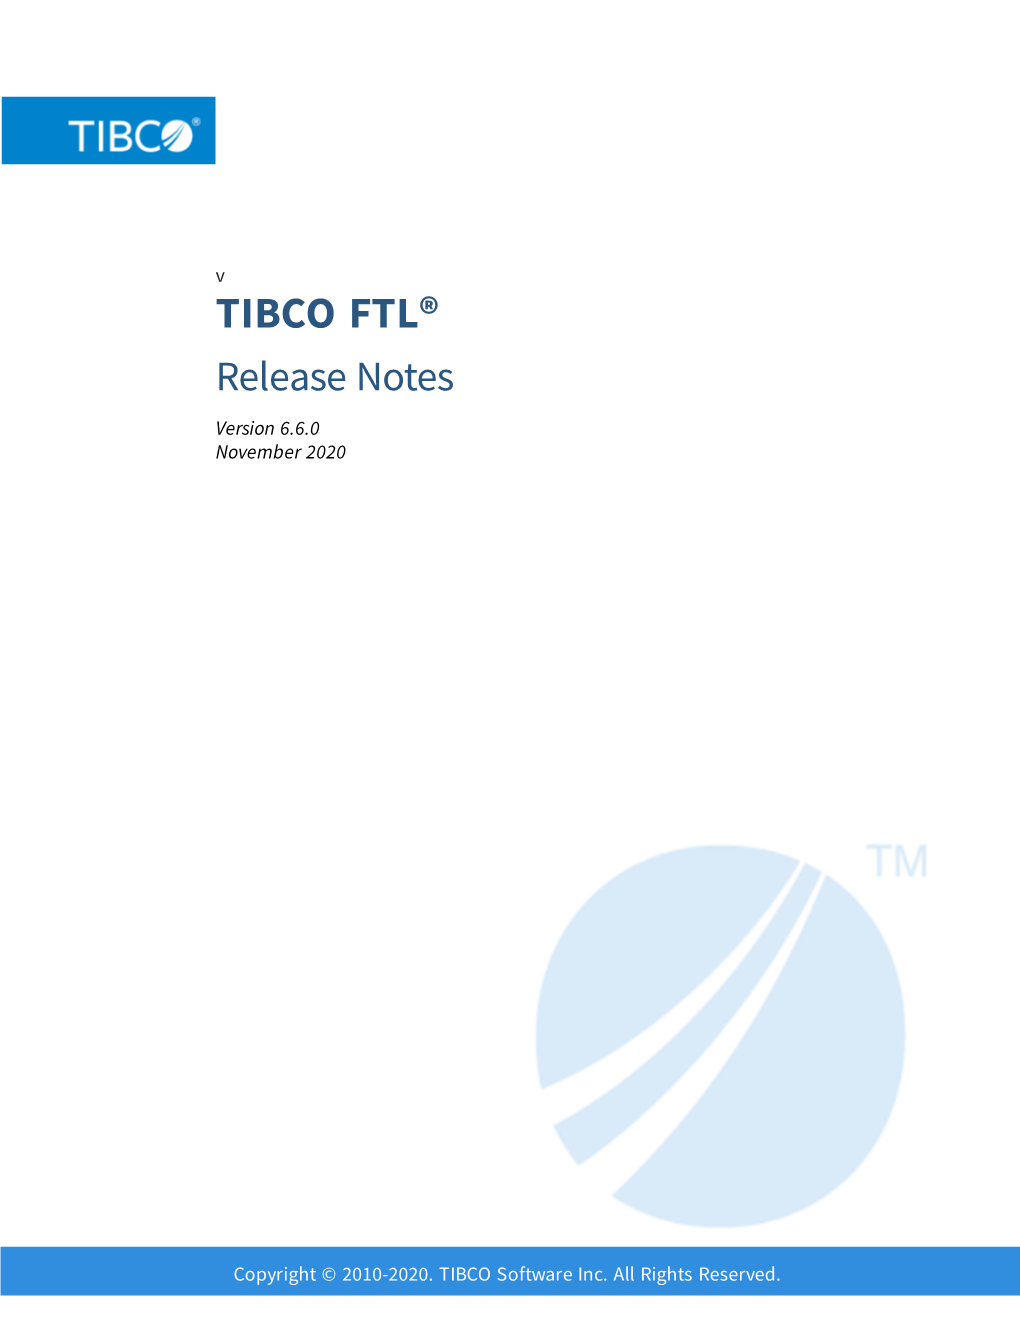 TIBCO FTL® Release Notes Version 6.6.0 November 2020